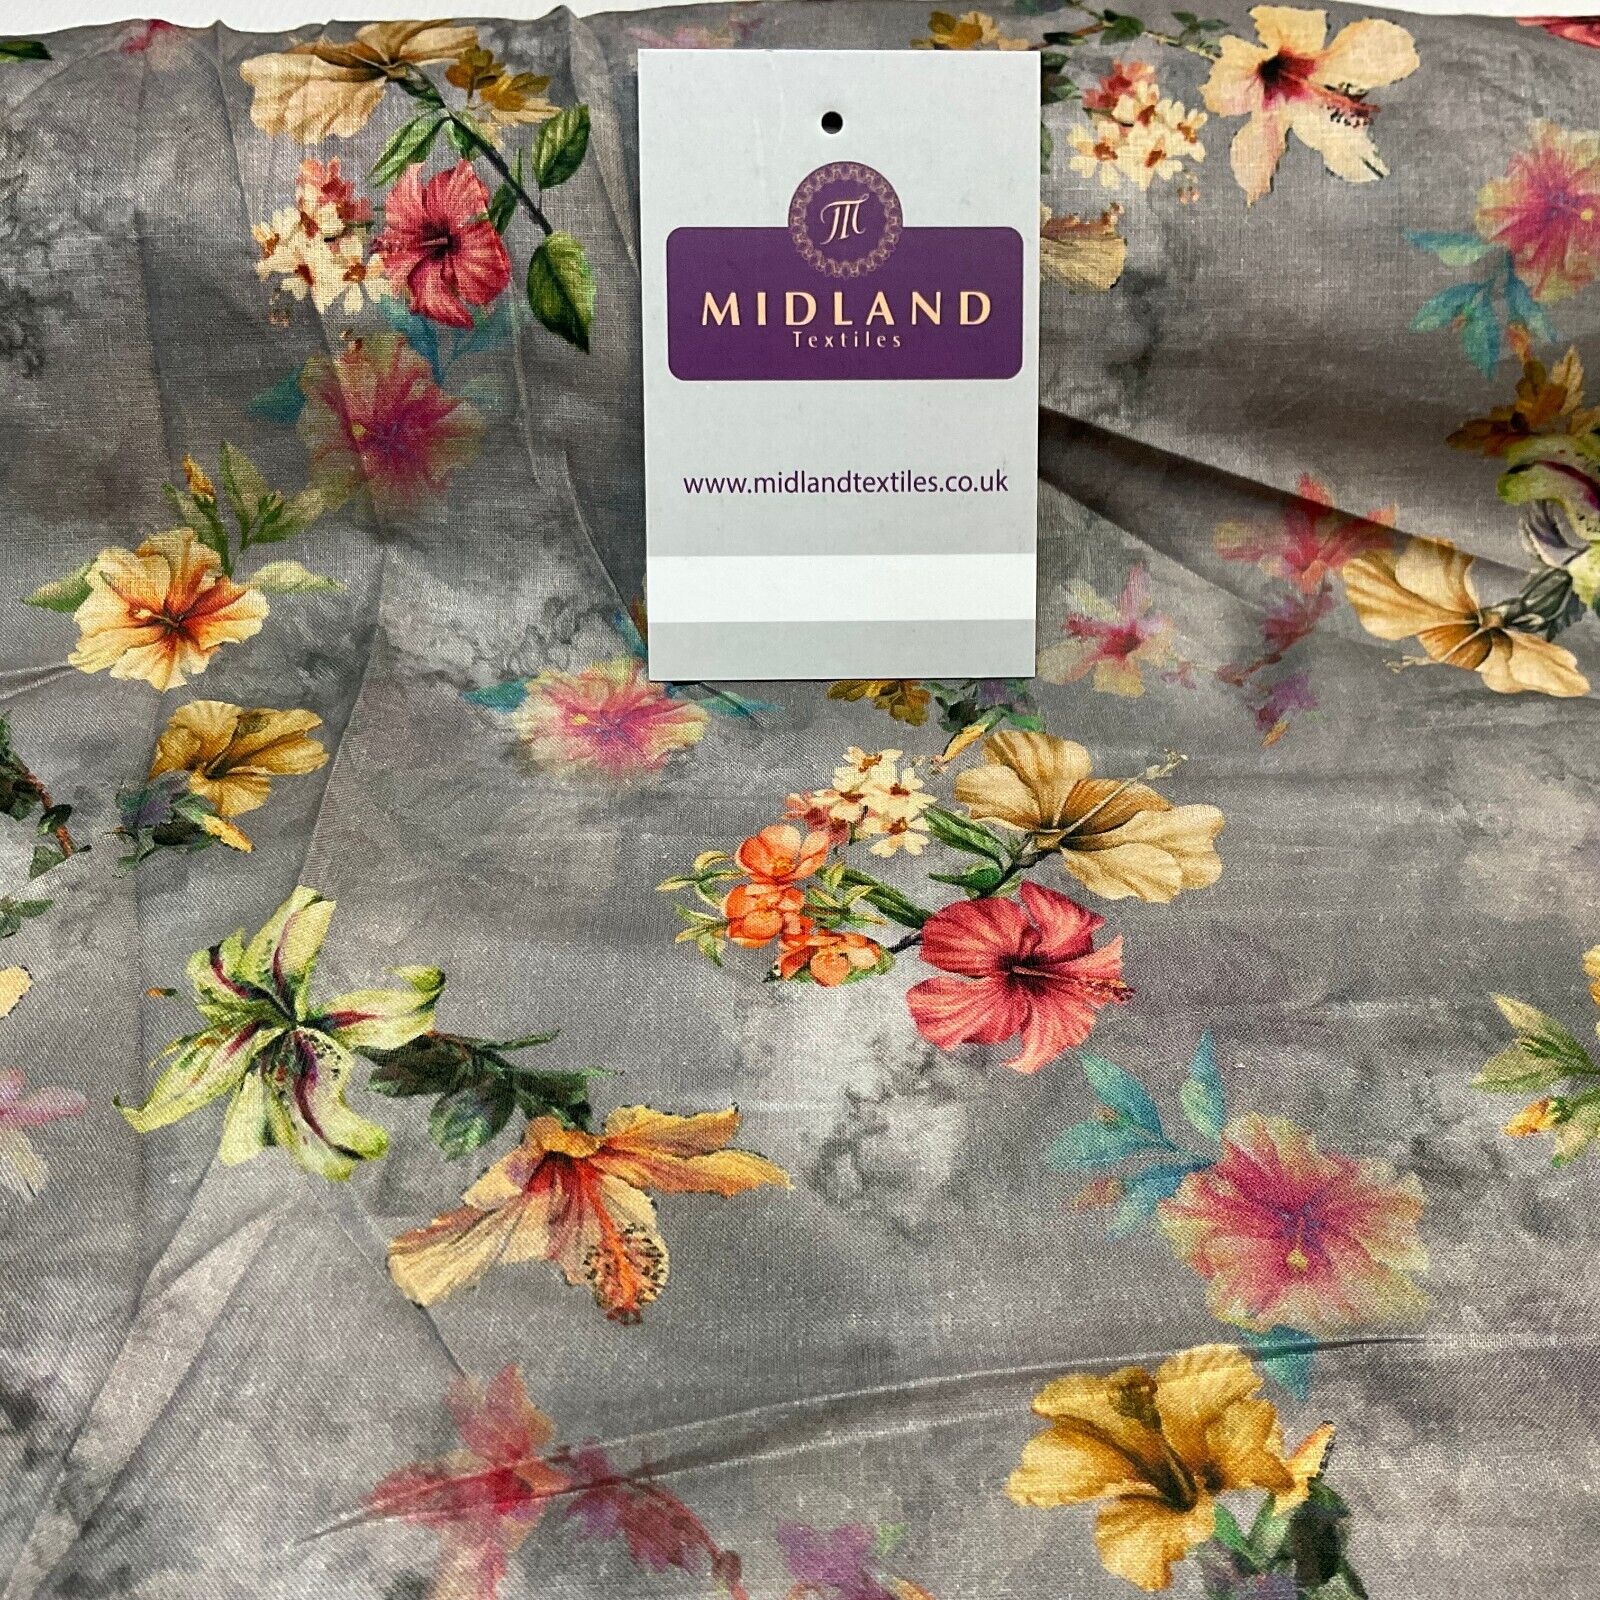 Summer floral lightweight Cotton Lawn dress Fabric Sold per Metre M1830